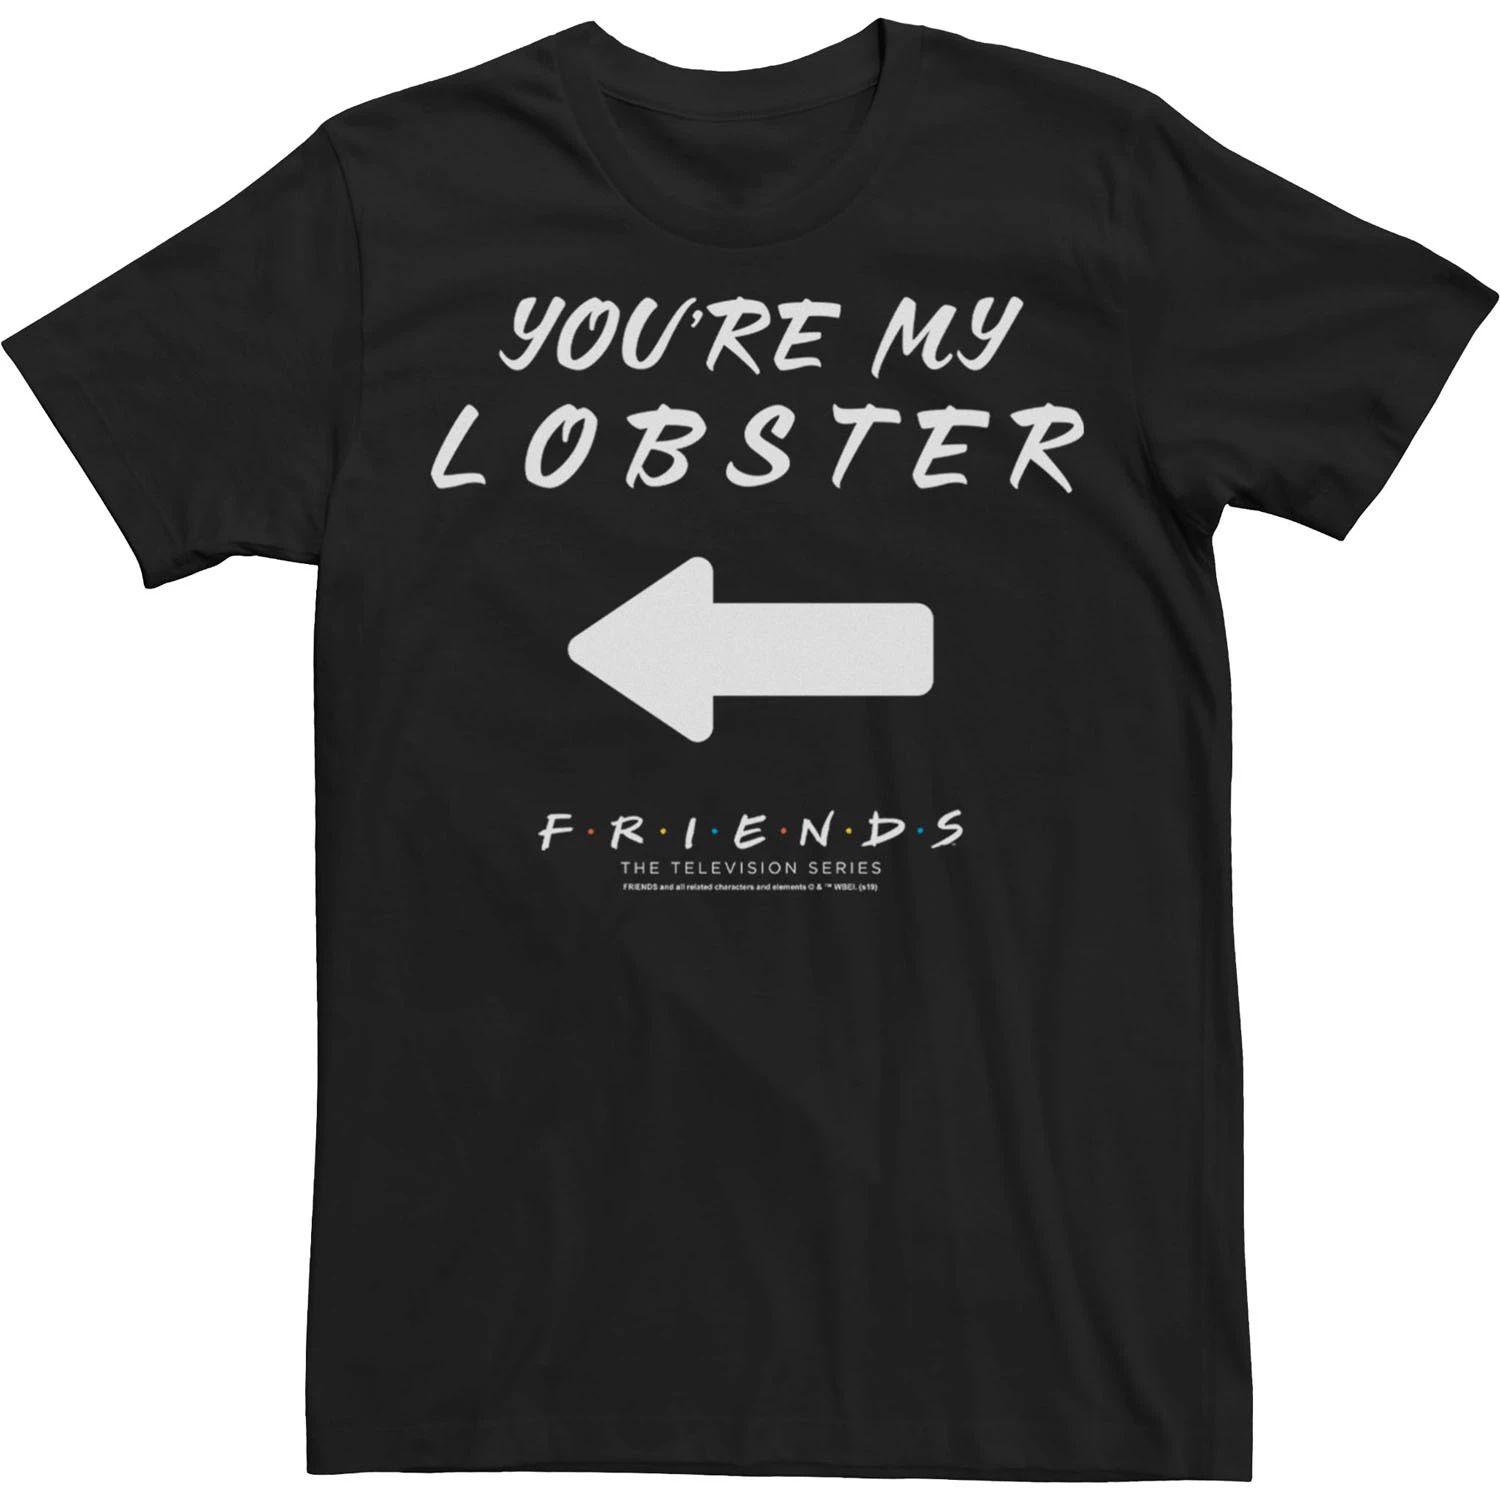 Мужская футболка Friends You're My Lobster с надписью Licensed Character